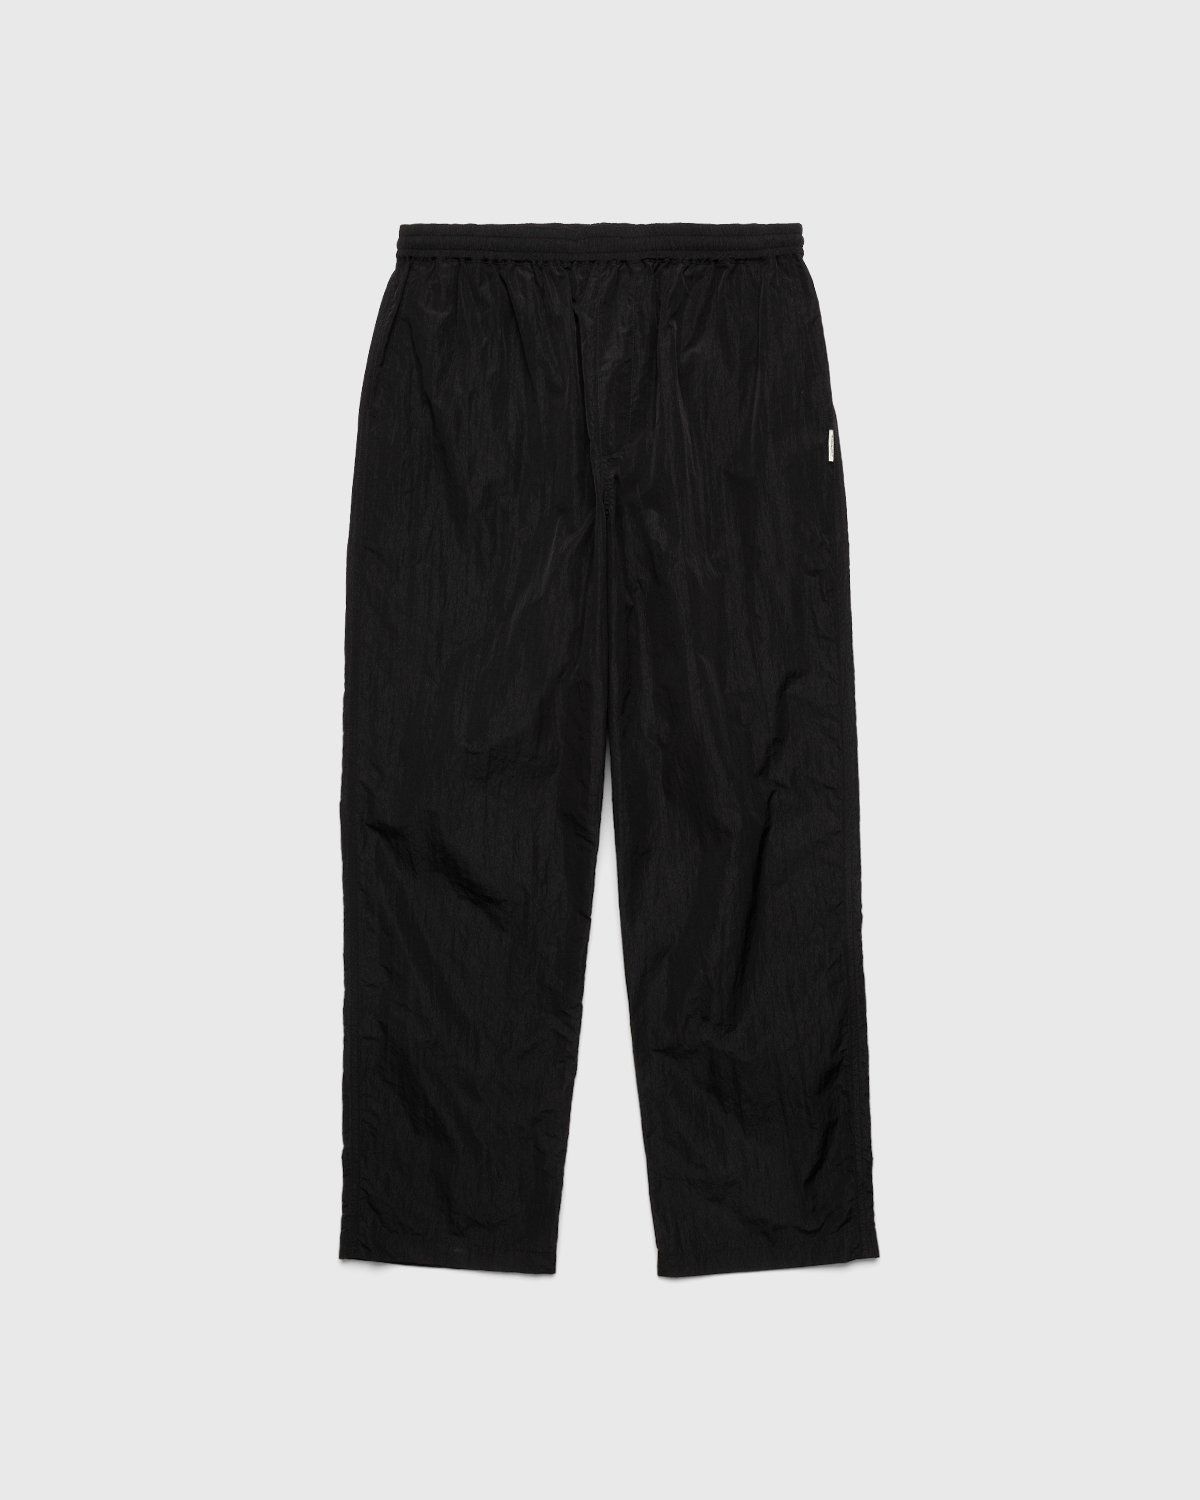 Highsnobiety – Crepe Nylon Elastic Pants Black - Active Pants - Black - Image 1